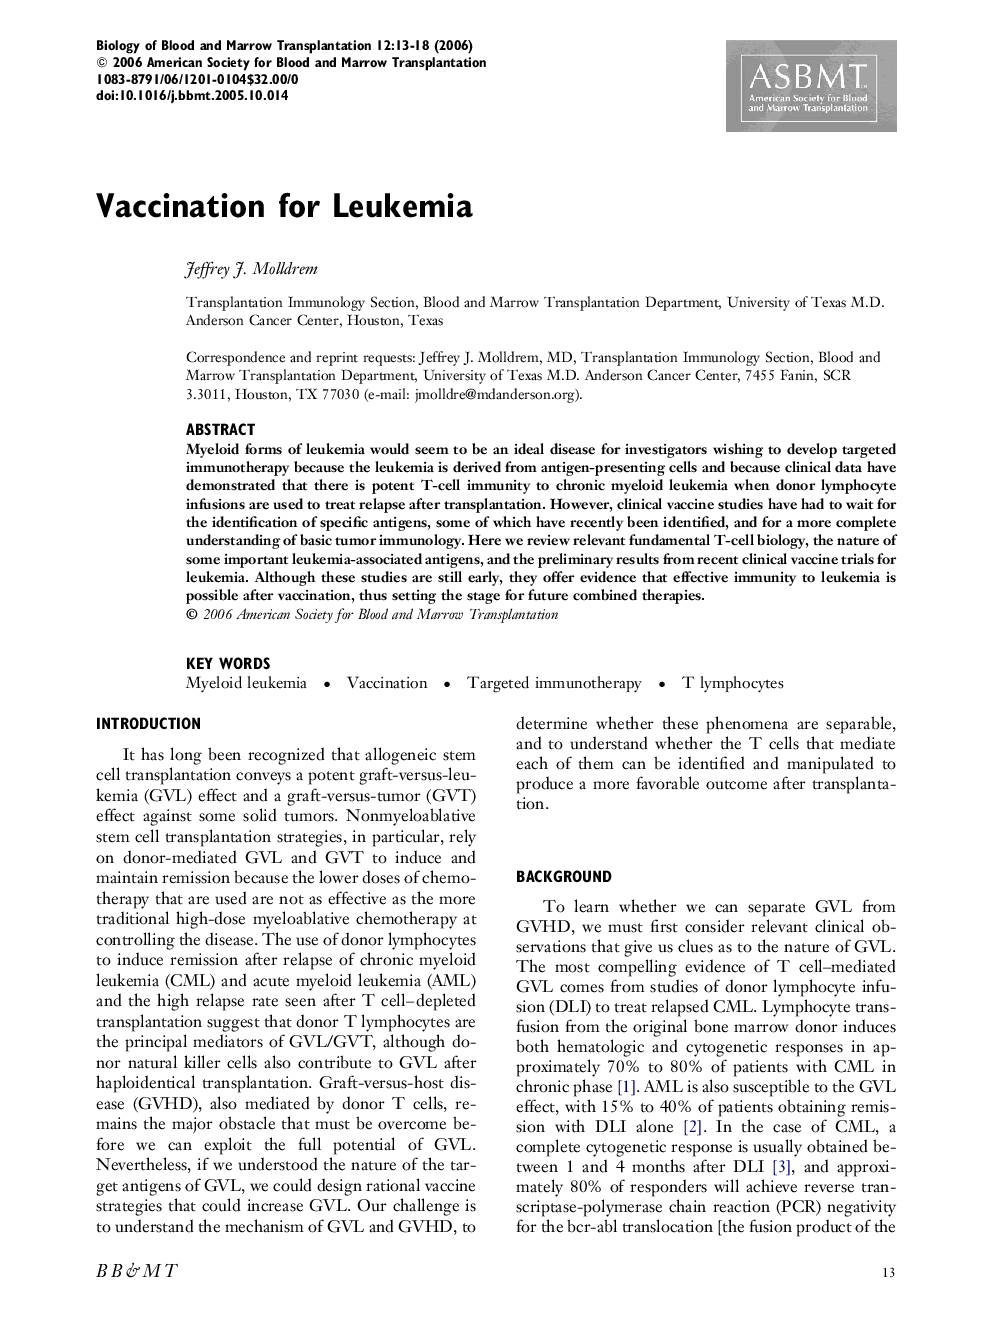 Vaccination for Leukemia